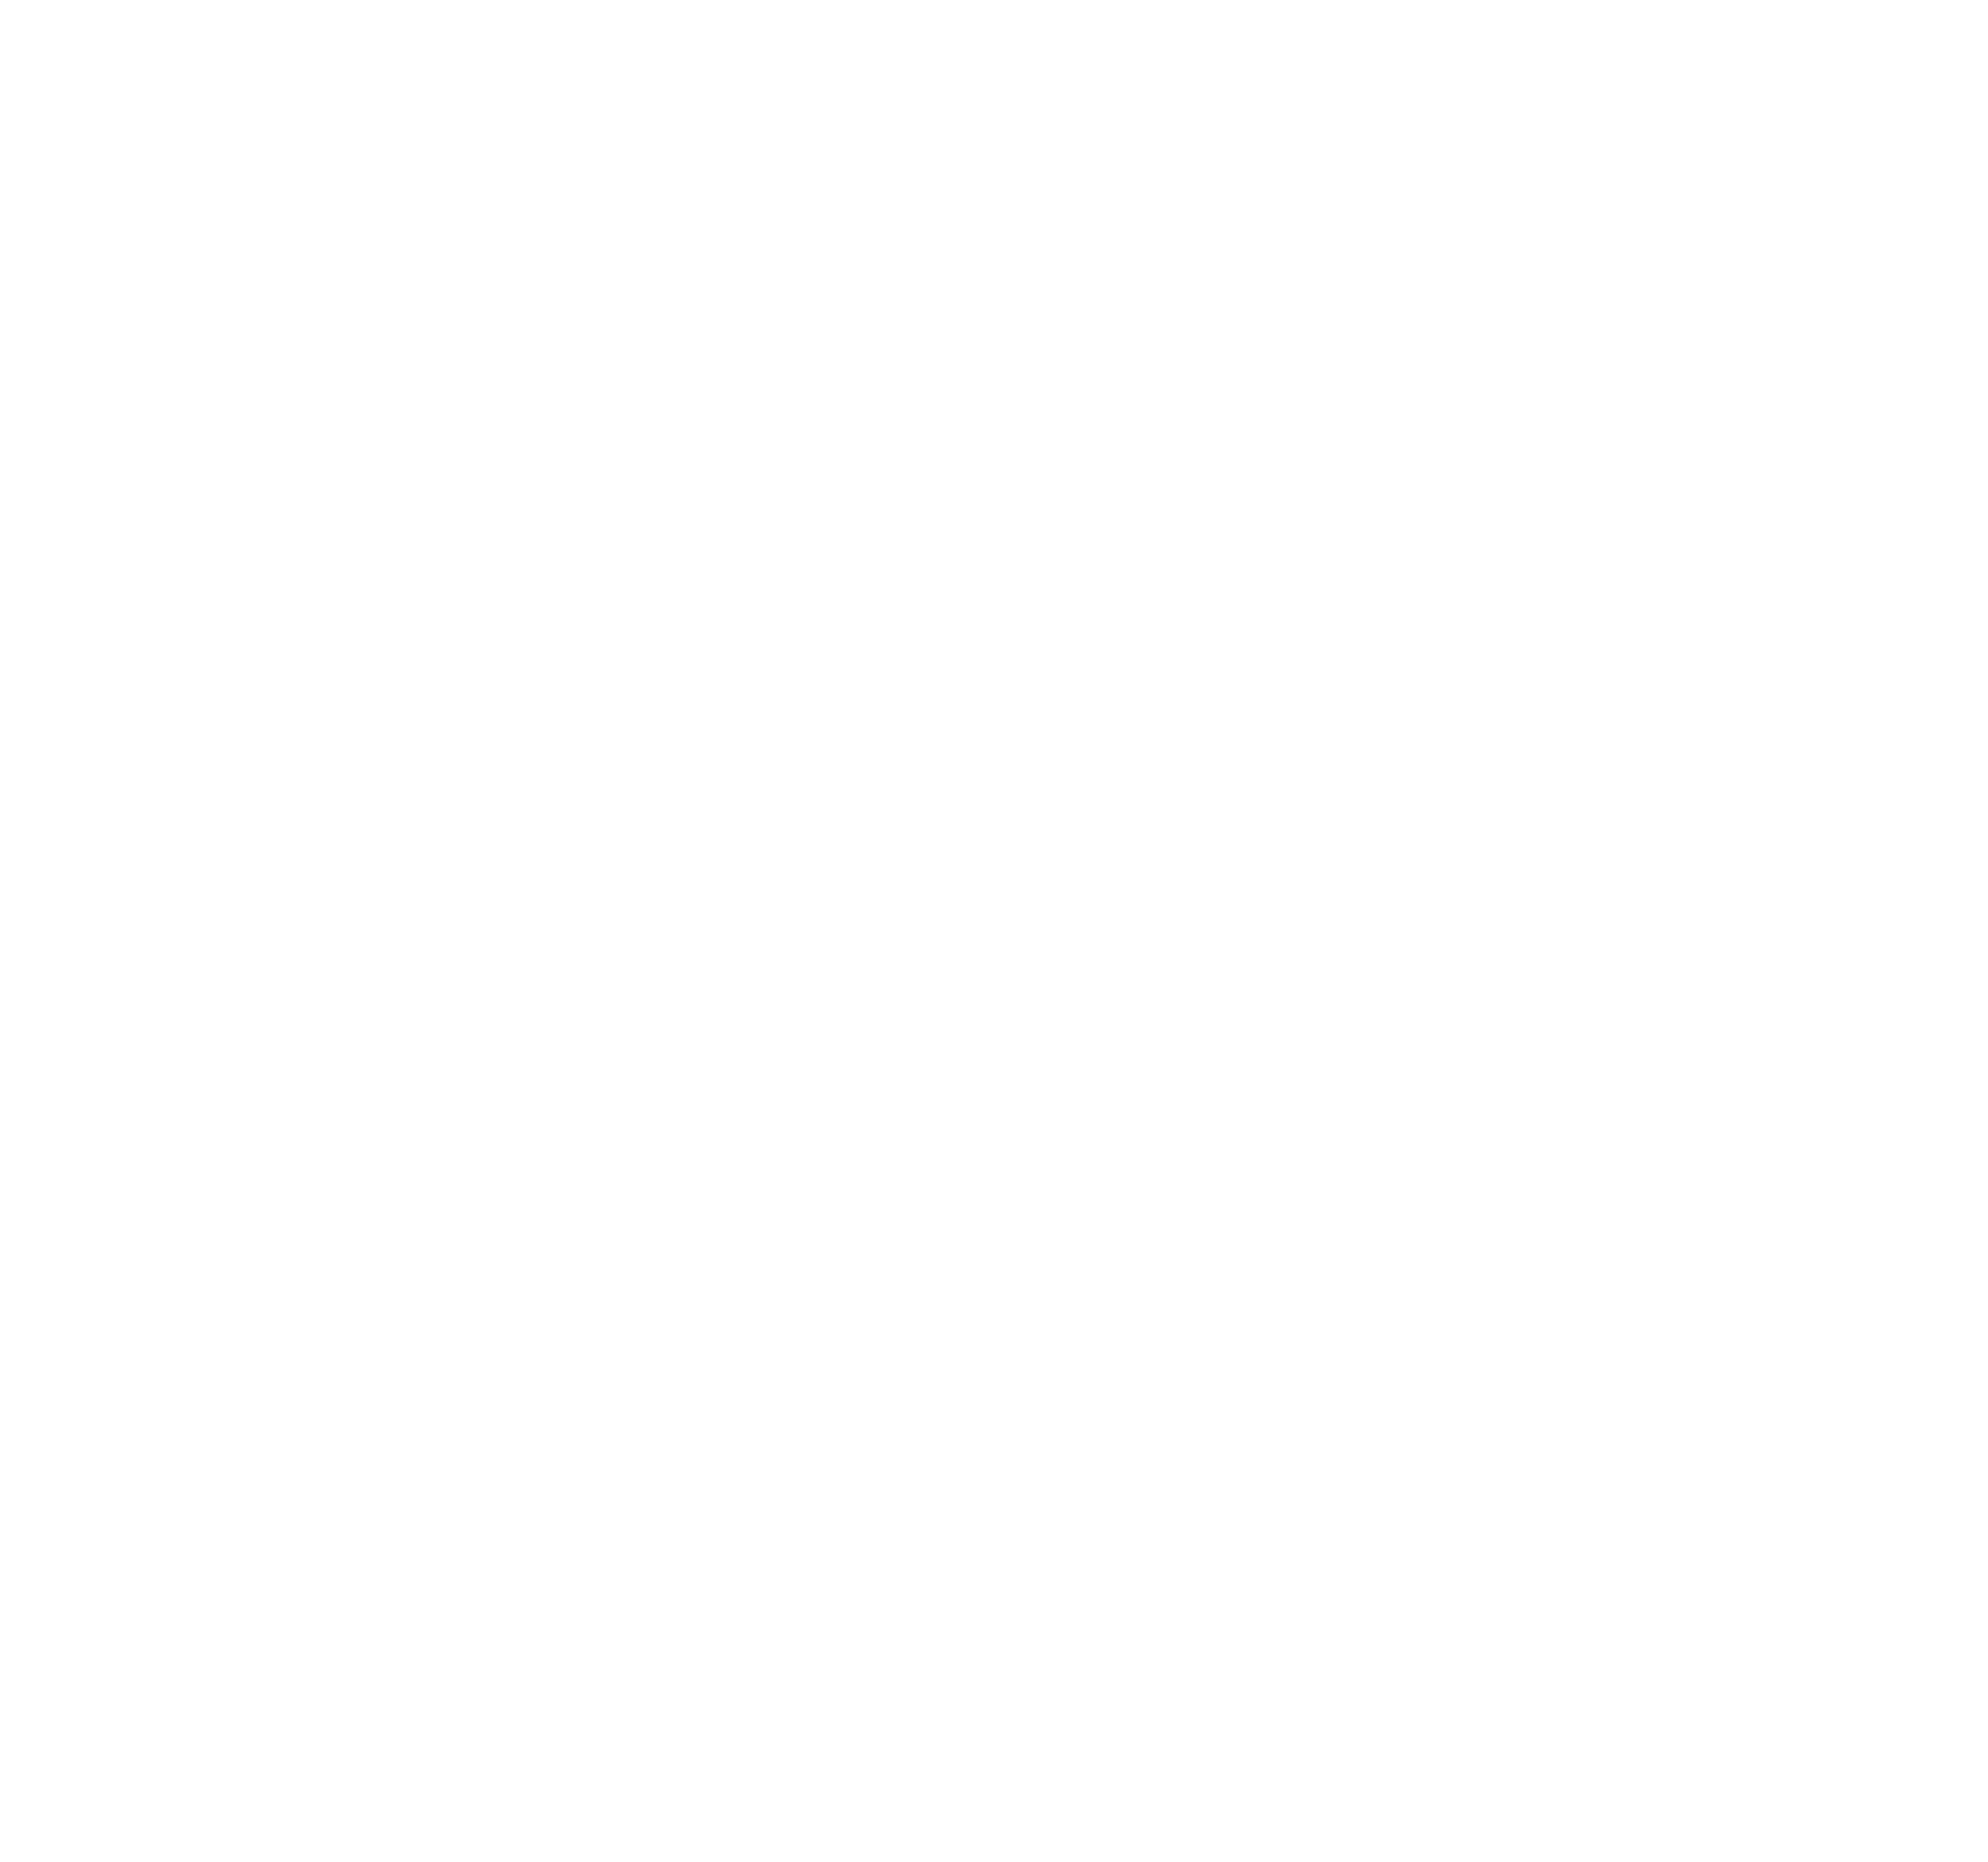 Alcohol Consumption Study